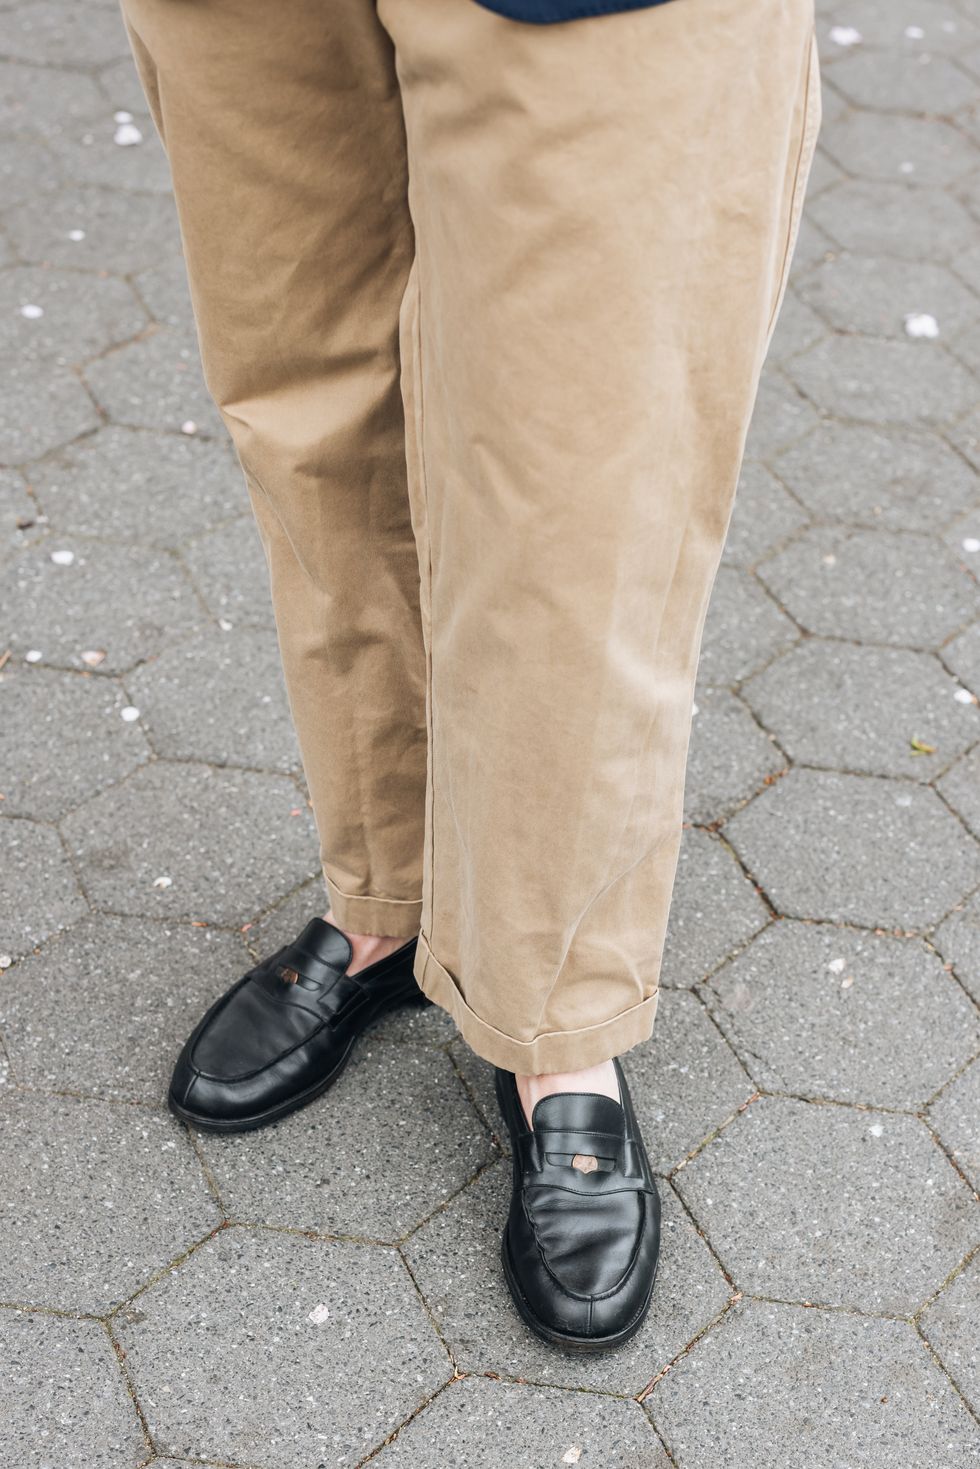 Chris Black on Duffel Bags and Men's Black Dress Shoes 2019